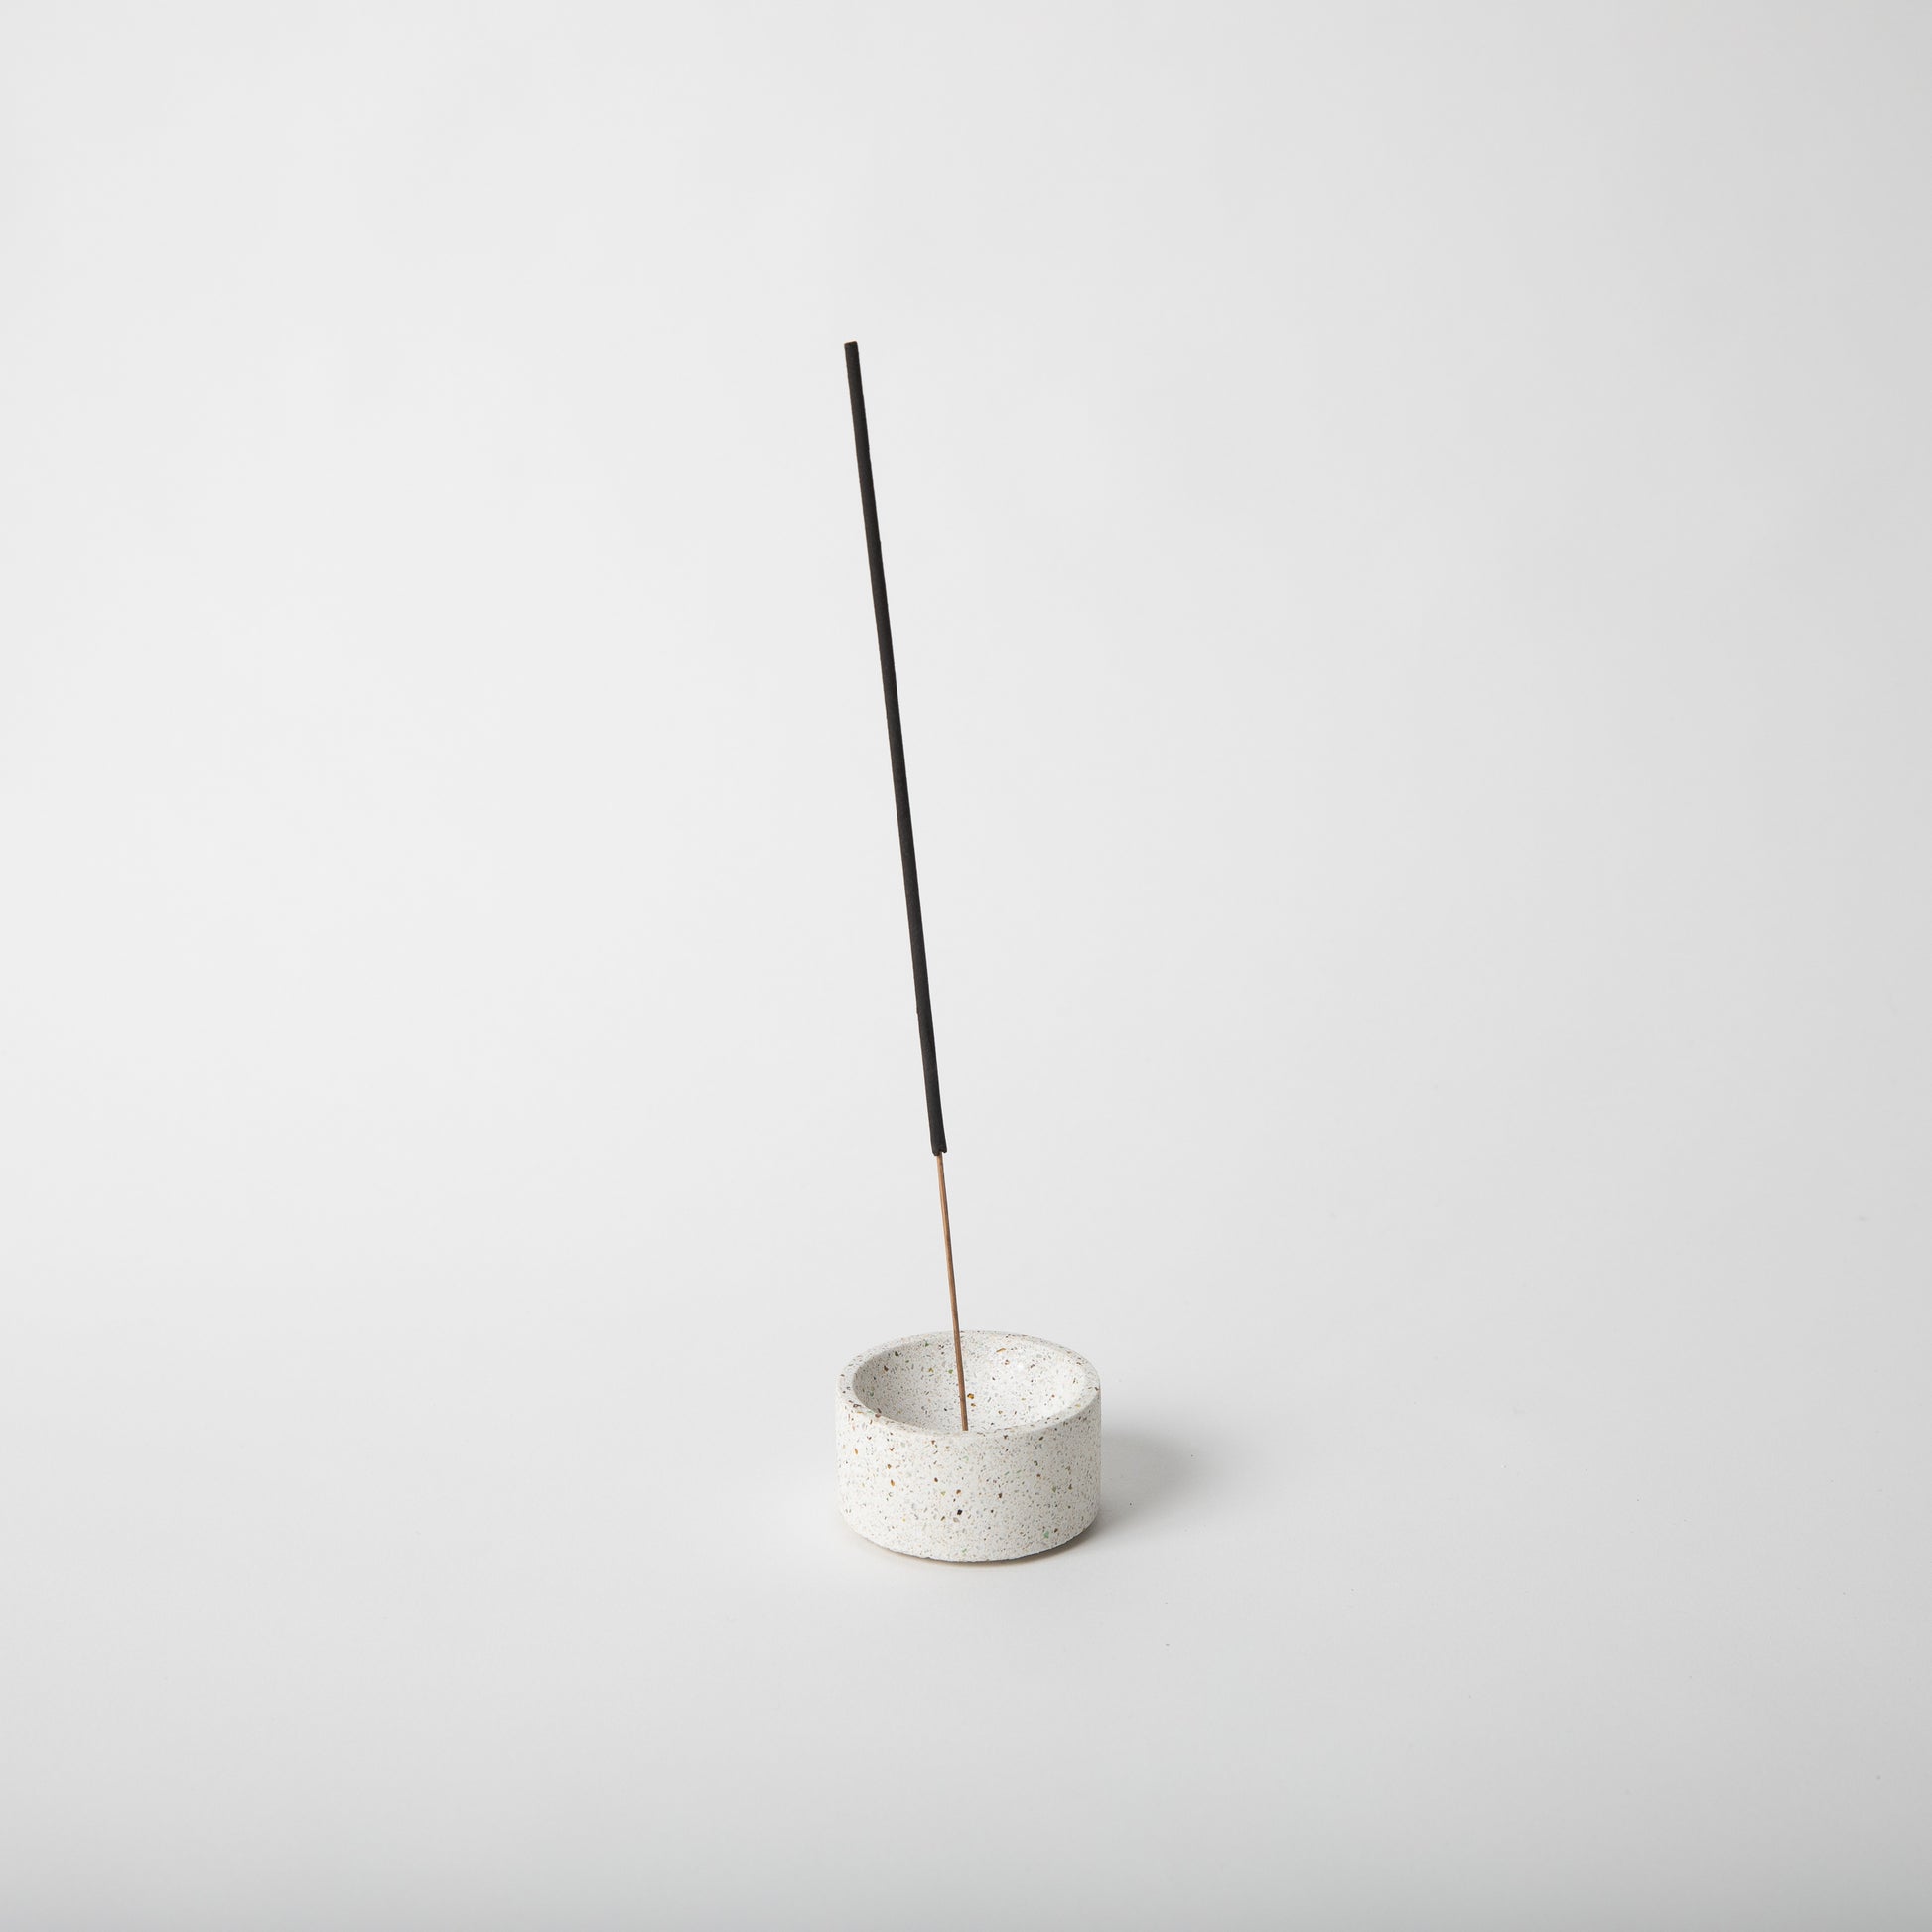 Round terrazzo concrete incense holder in white with an incense stick.